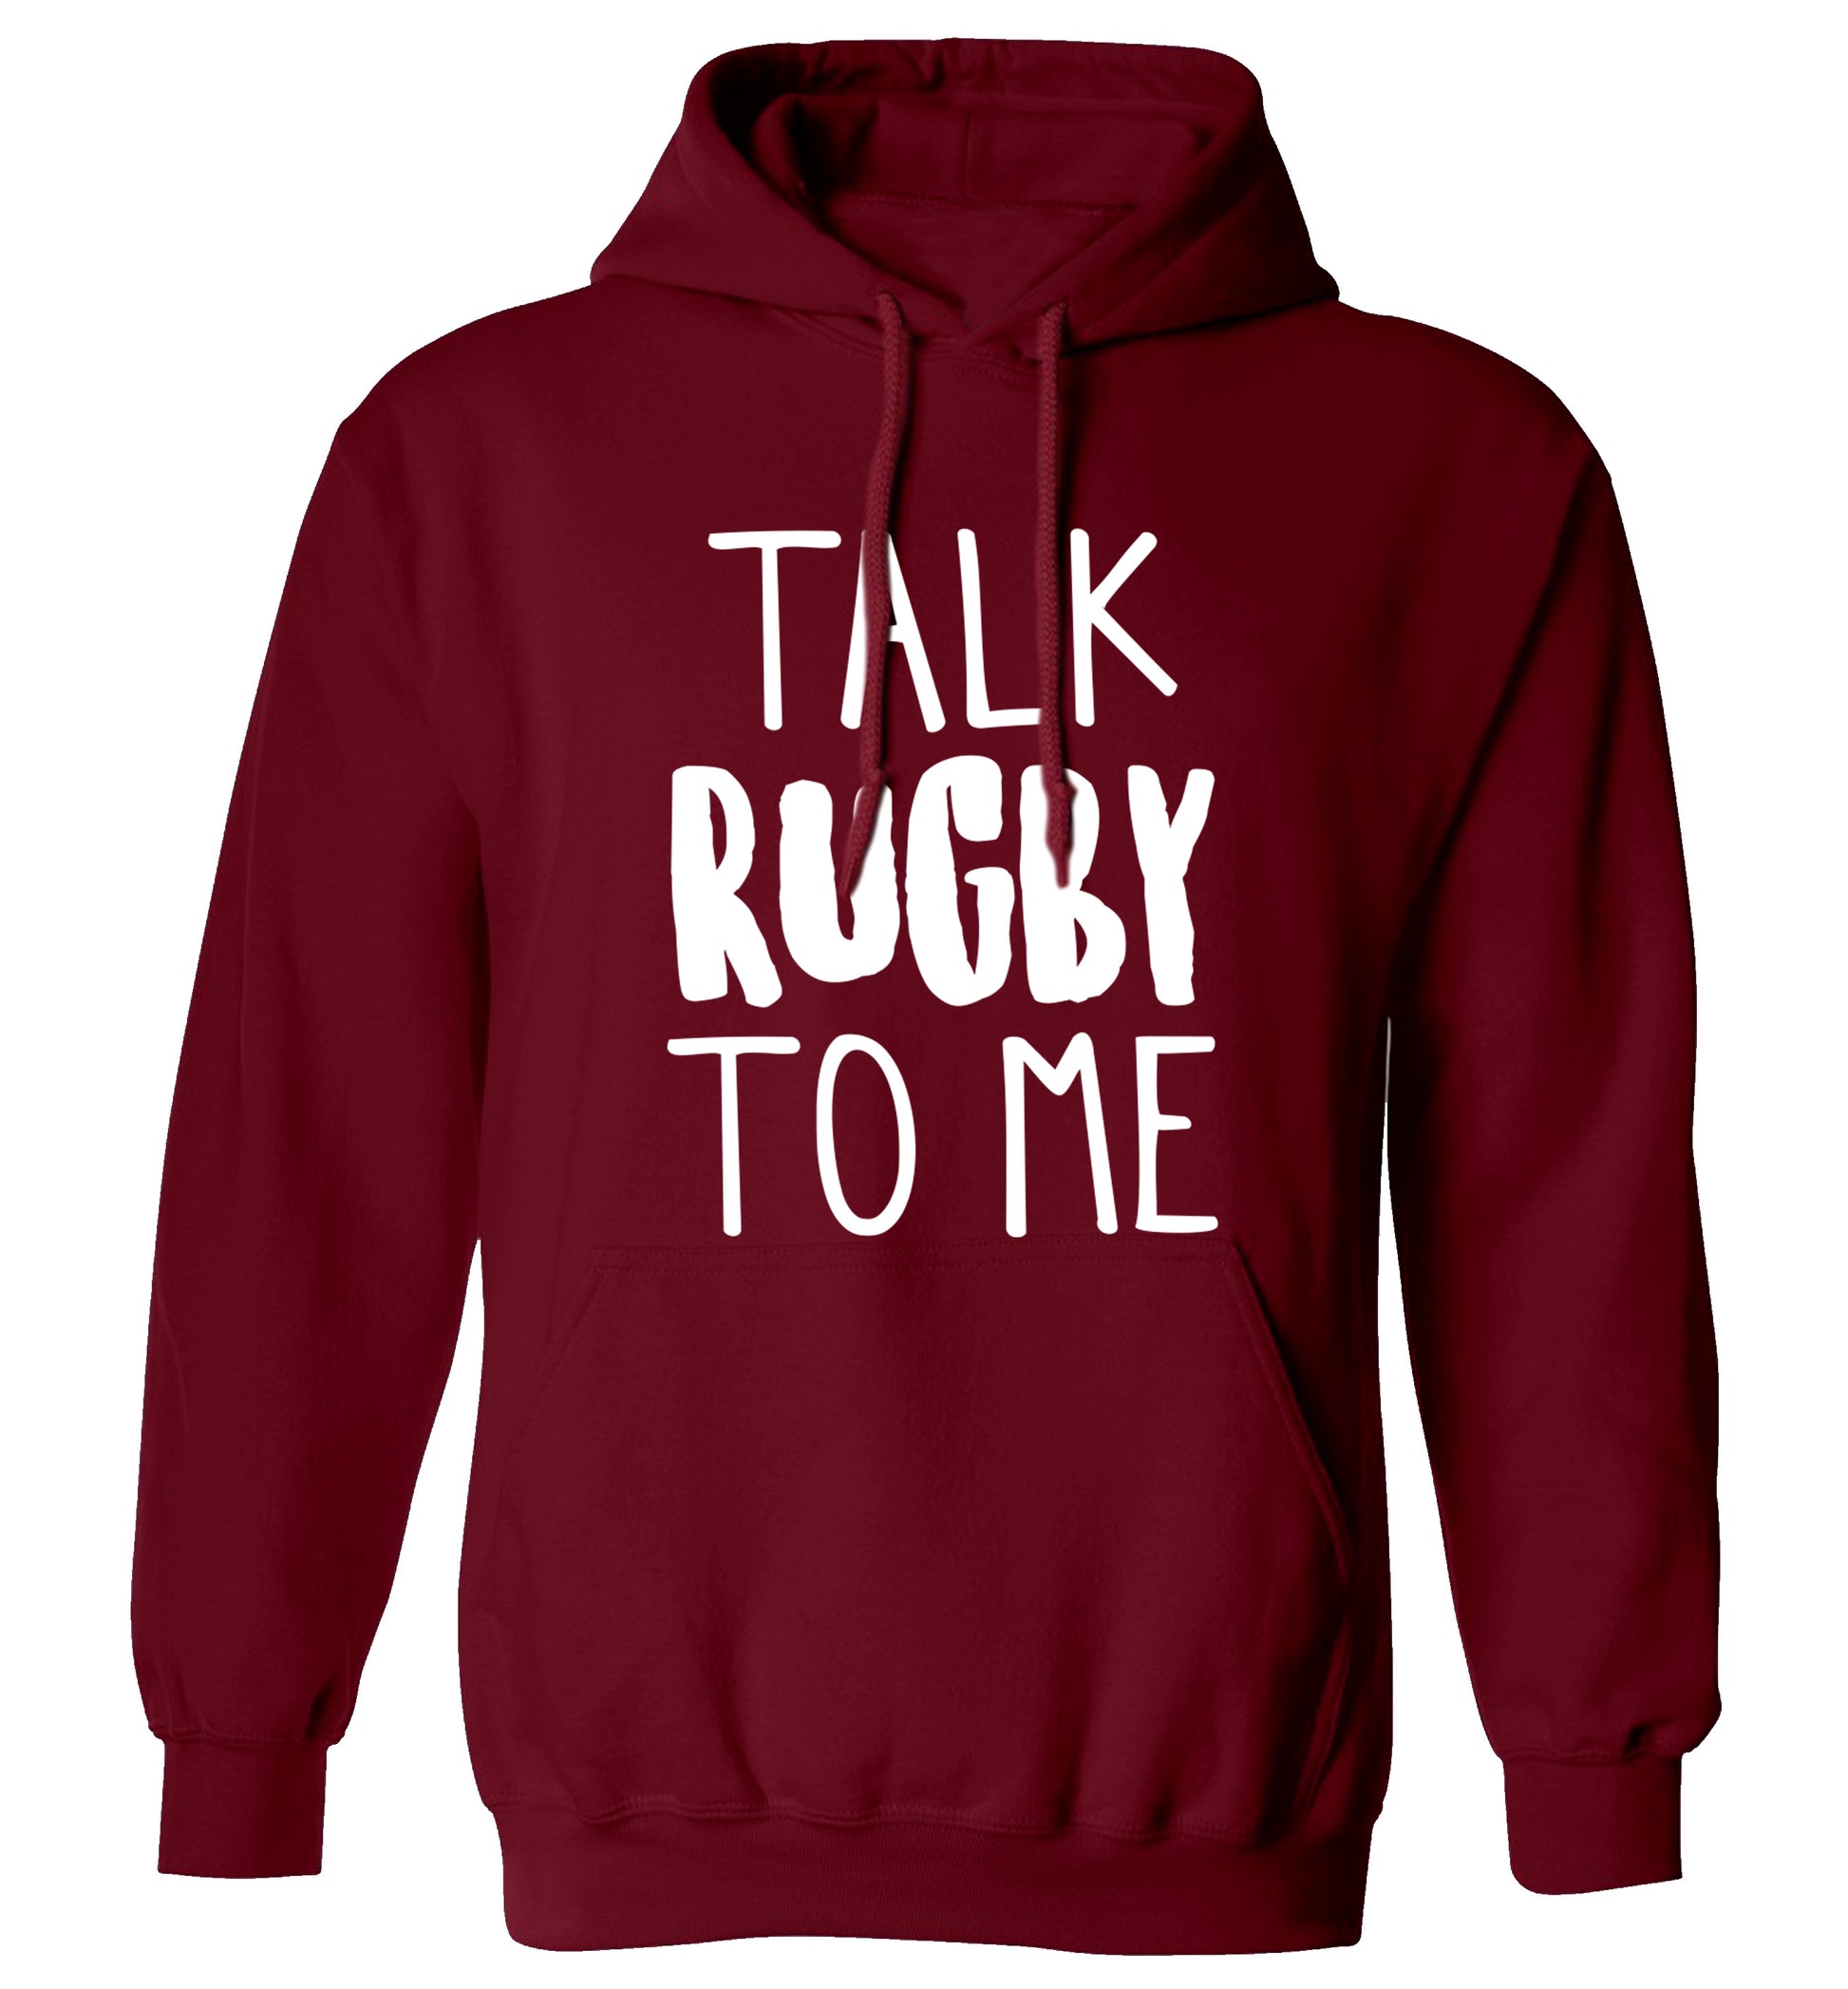 Talk rugby to me adults unisex maroon hoodie 2XL